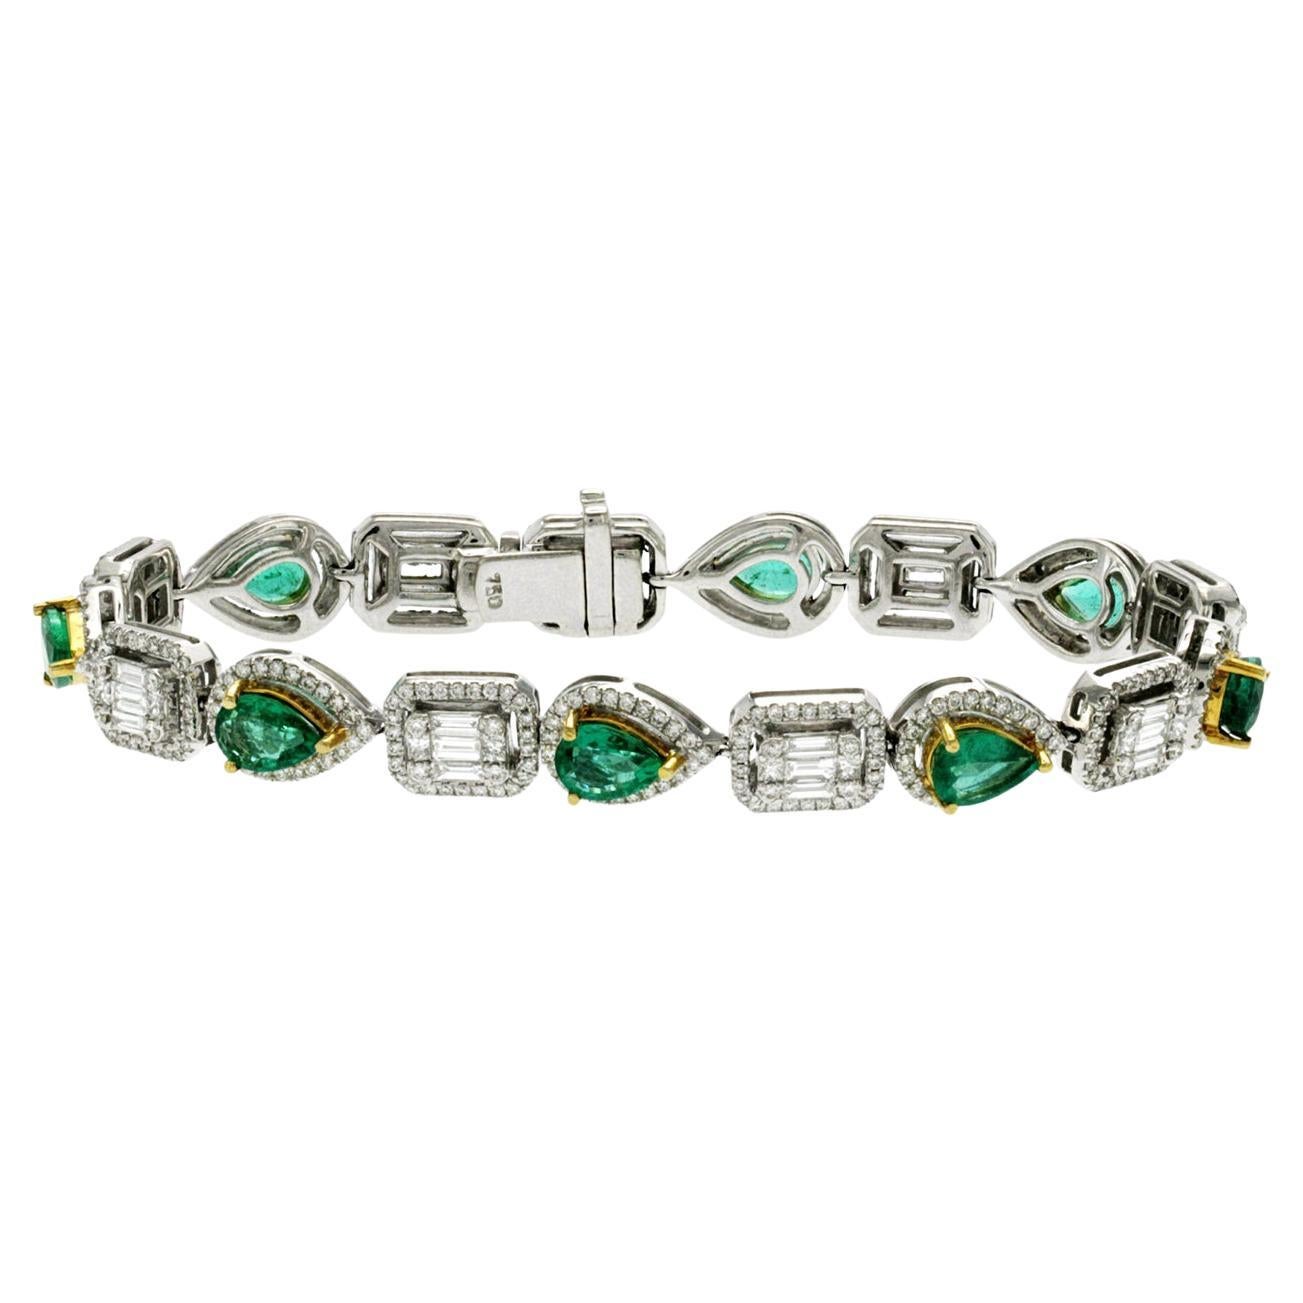 5.80 CT Natural Emerald & 4.58 CT Diamonds on 18K White Gold Bracelet